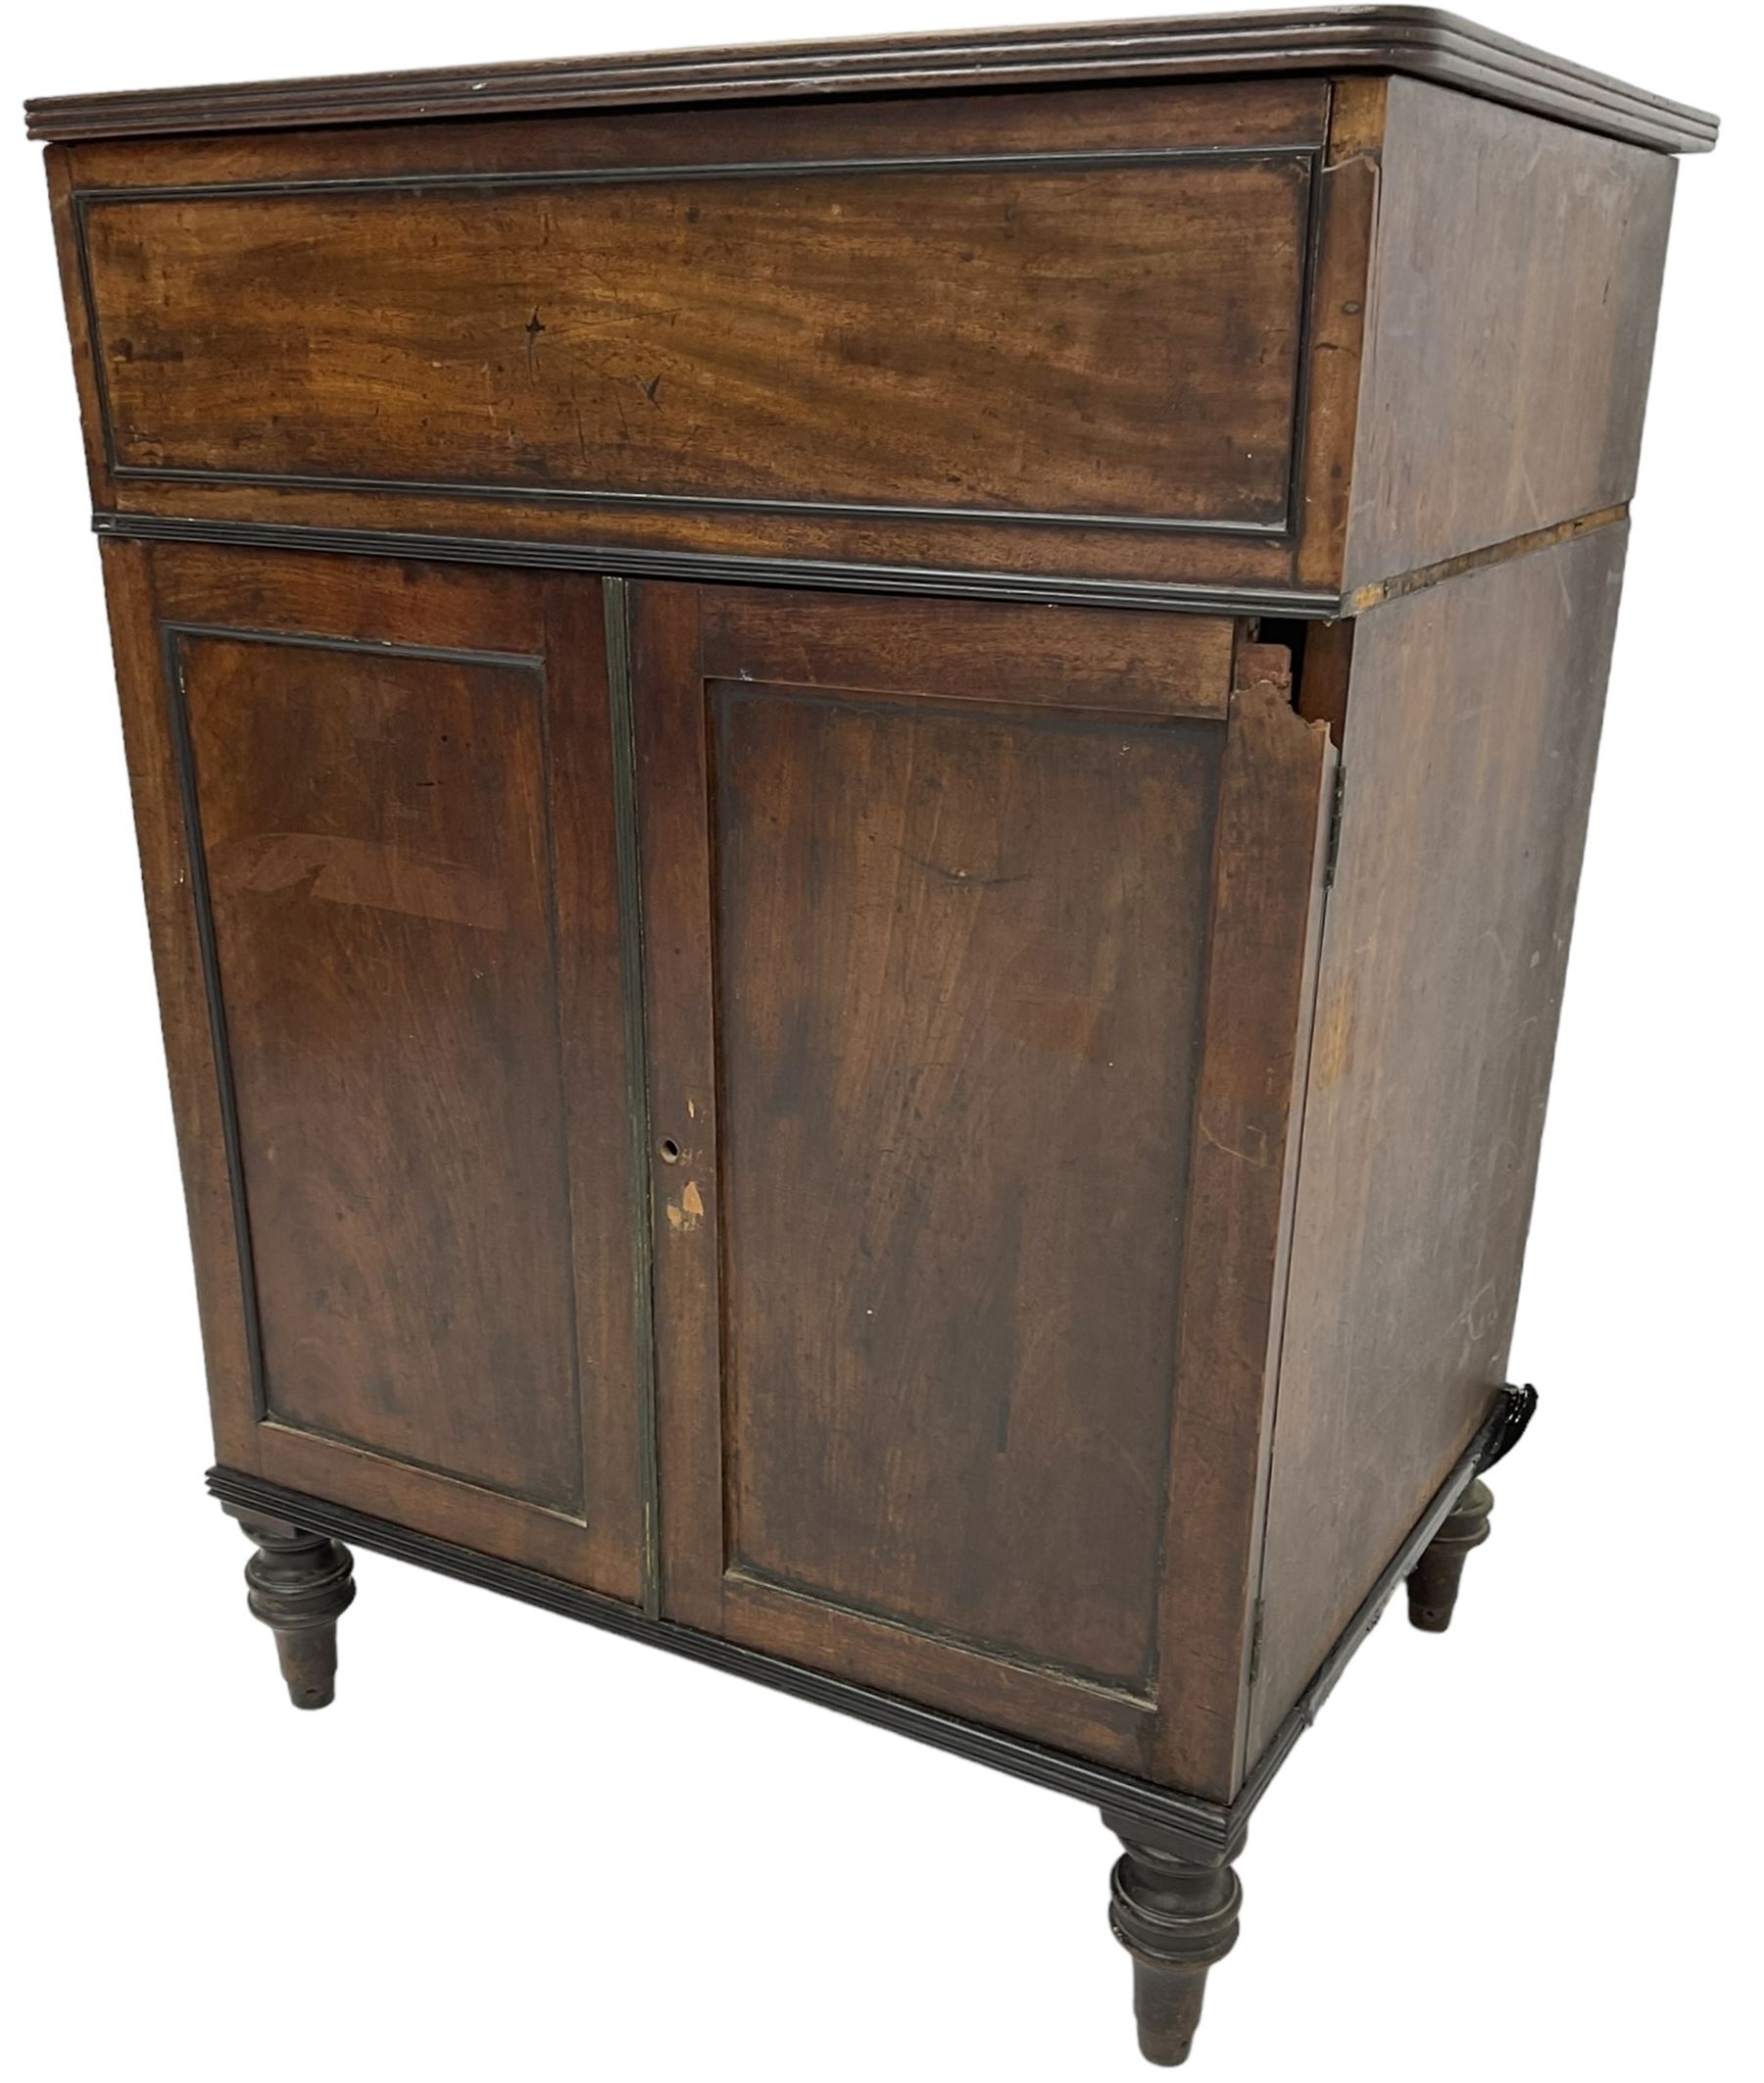 George III mahogany gentleman's dressing cabinet or washstand - Image 5 of 6